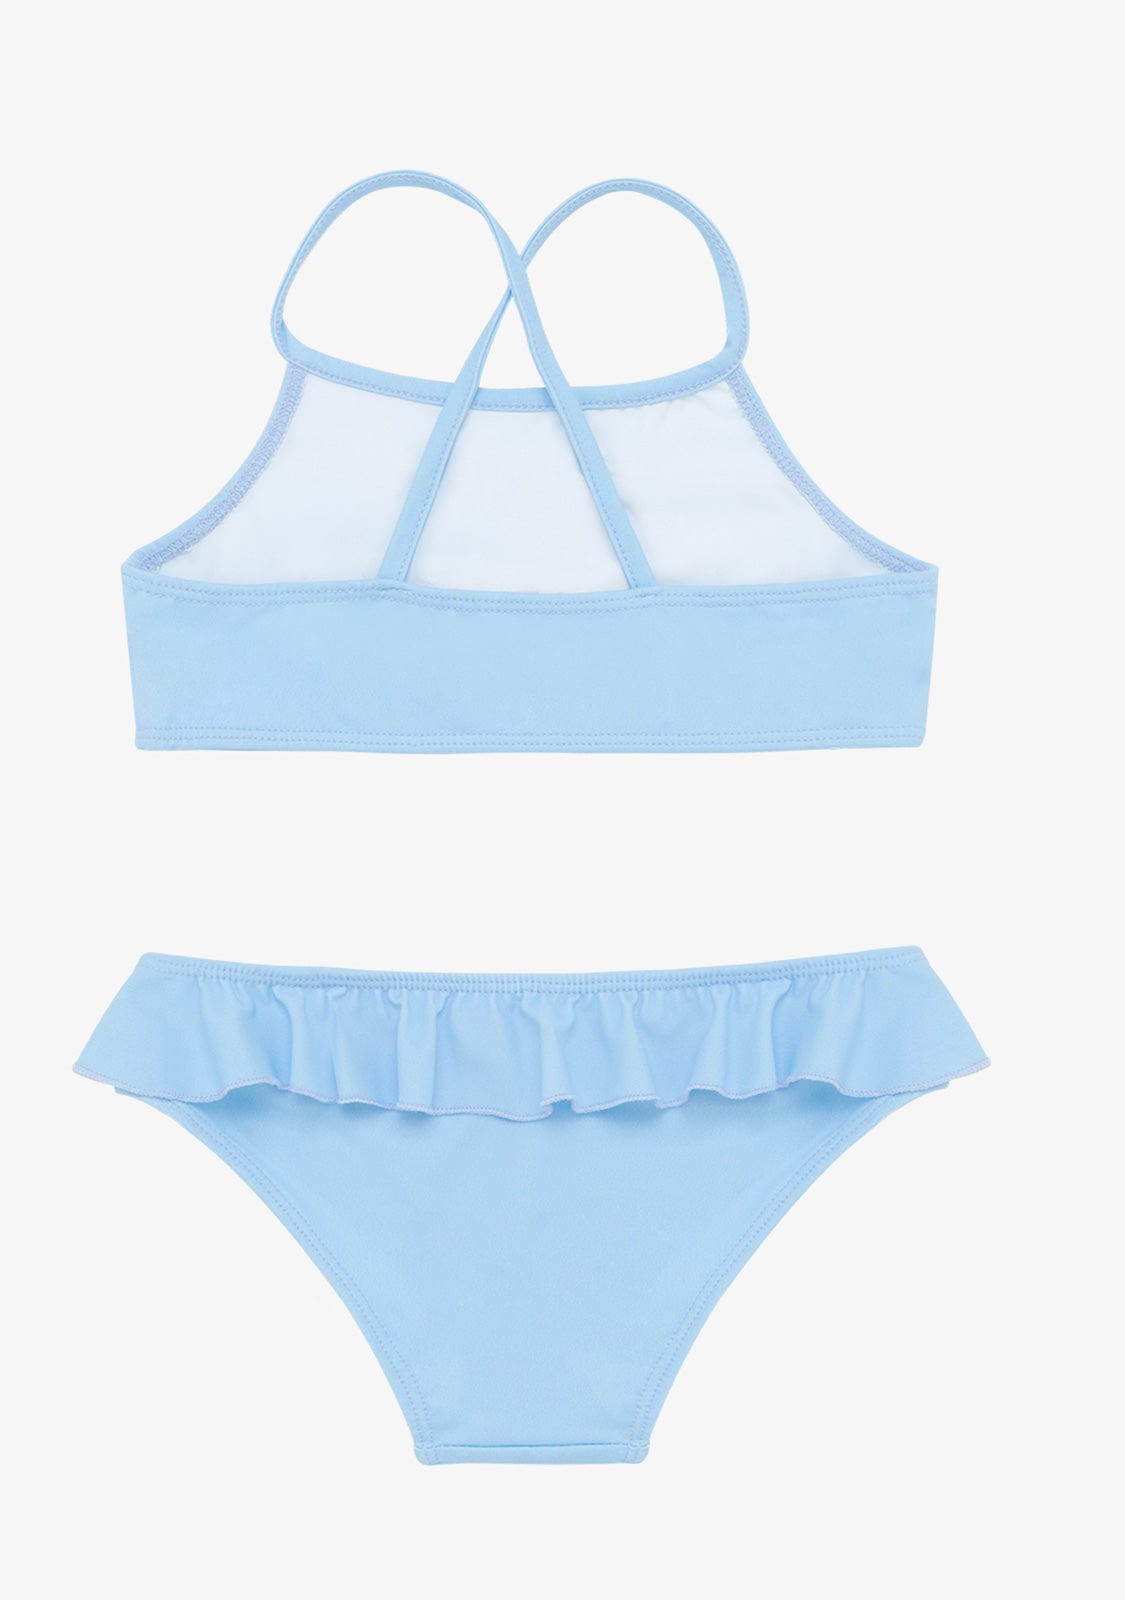 CONGUITOS TEXTIL Clothing Girl's Bluish Ruffled Bikini